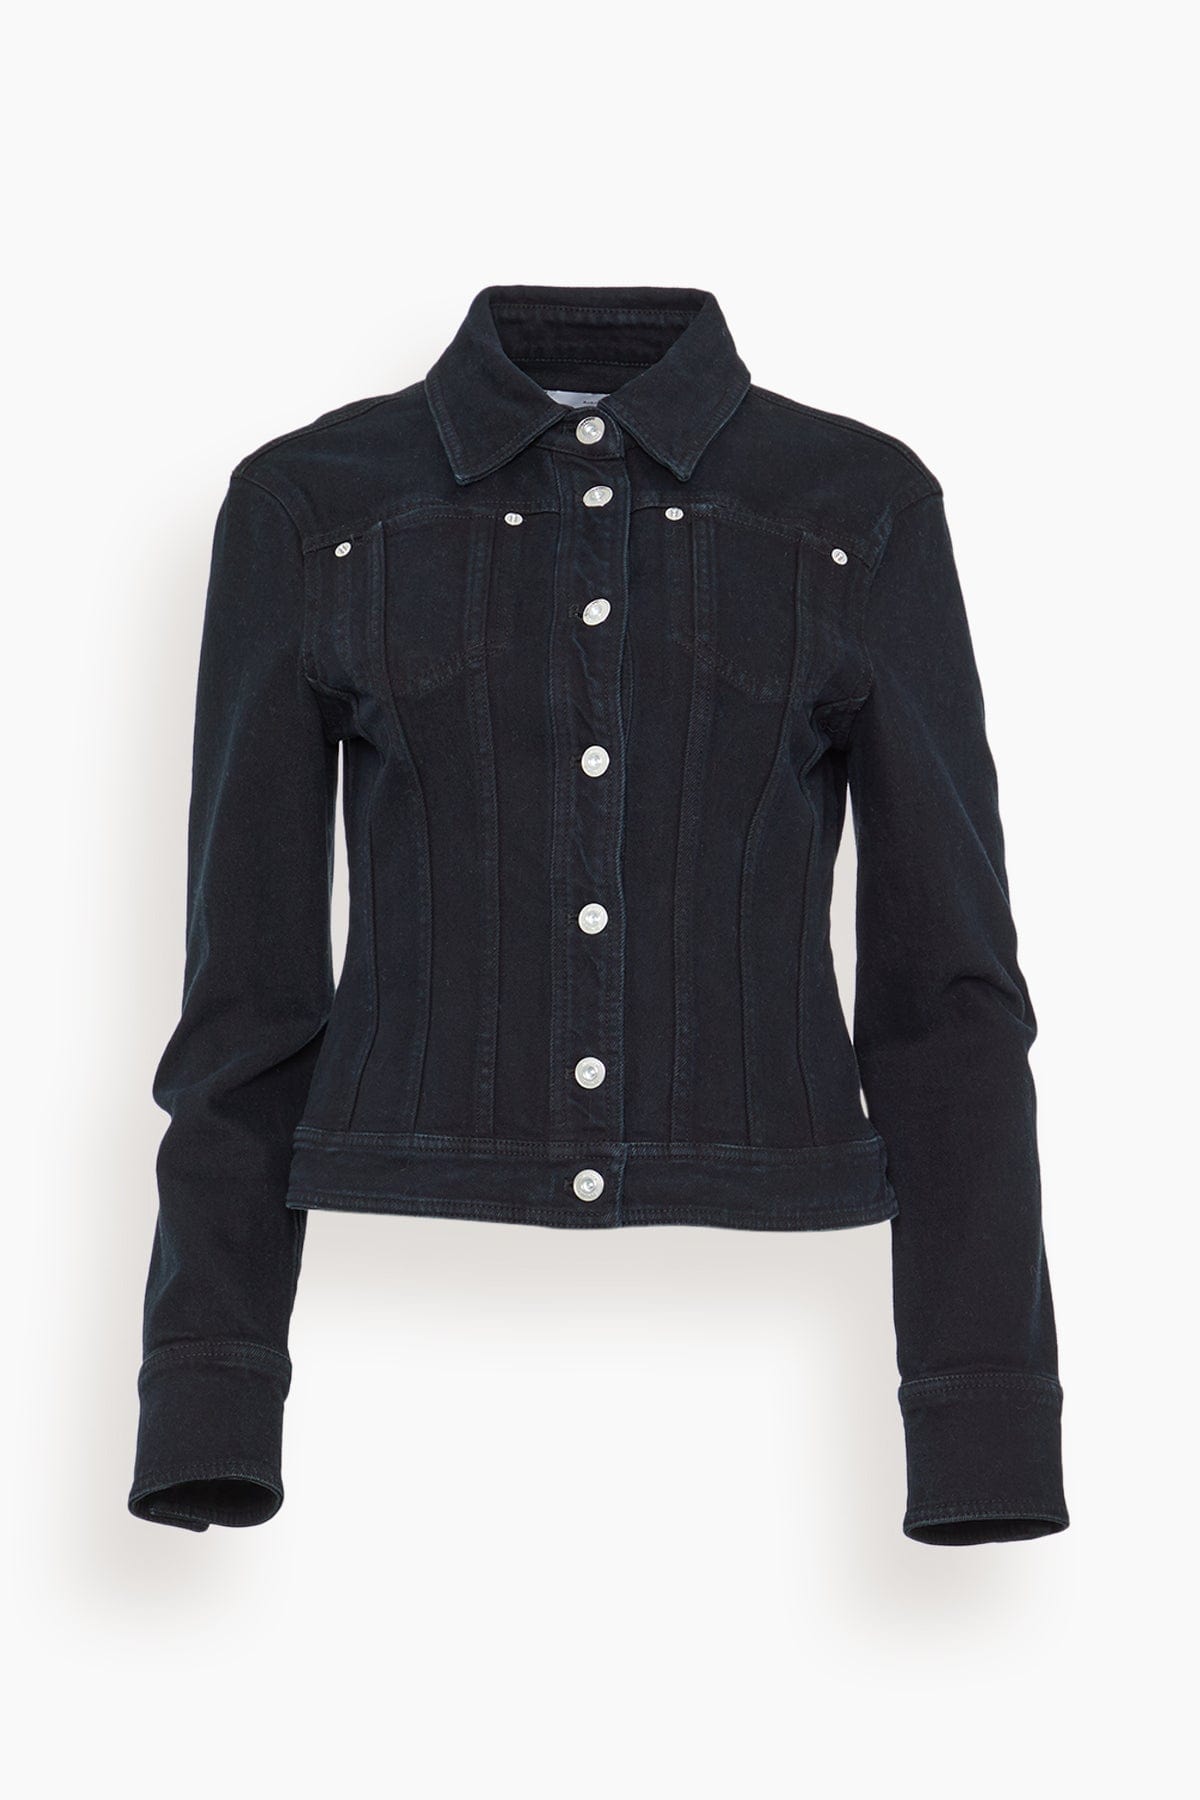 Proenza Schouler White Label Denim Jacket in Black - Black - Size: 4